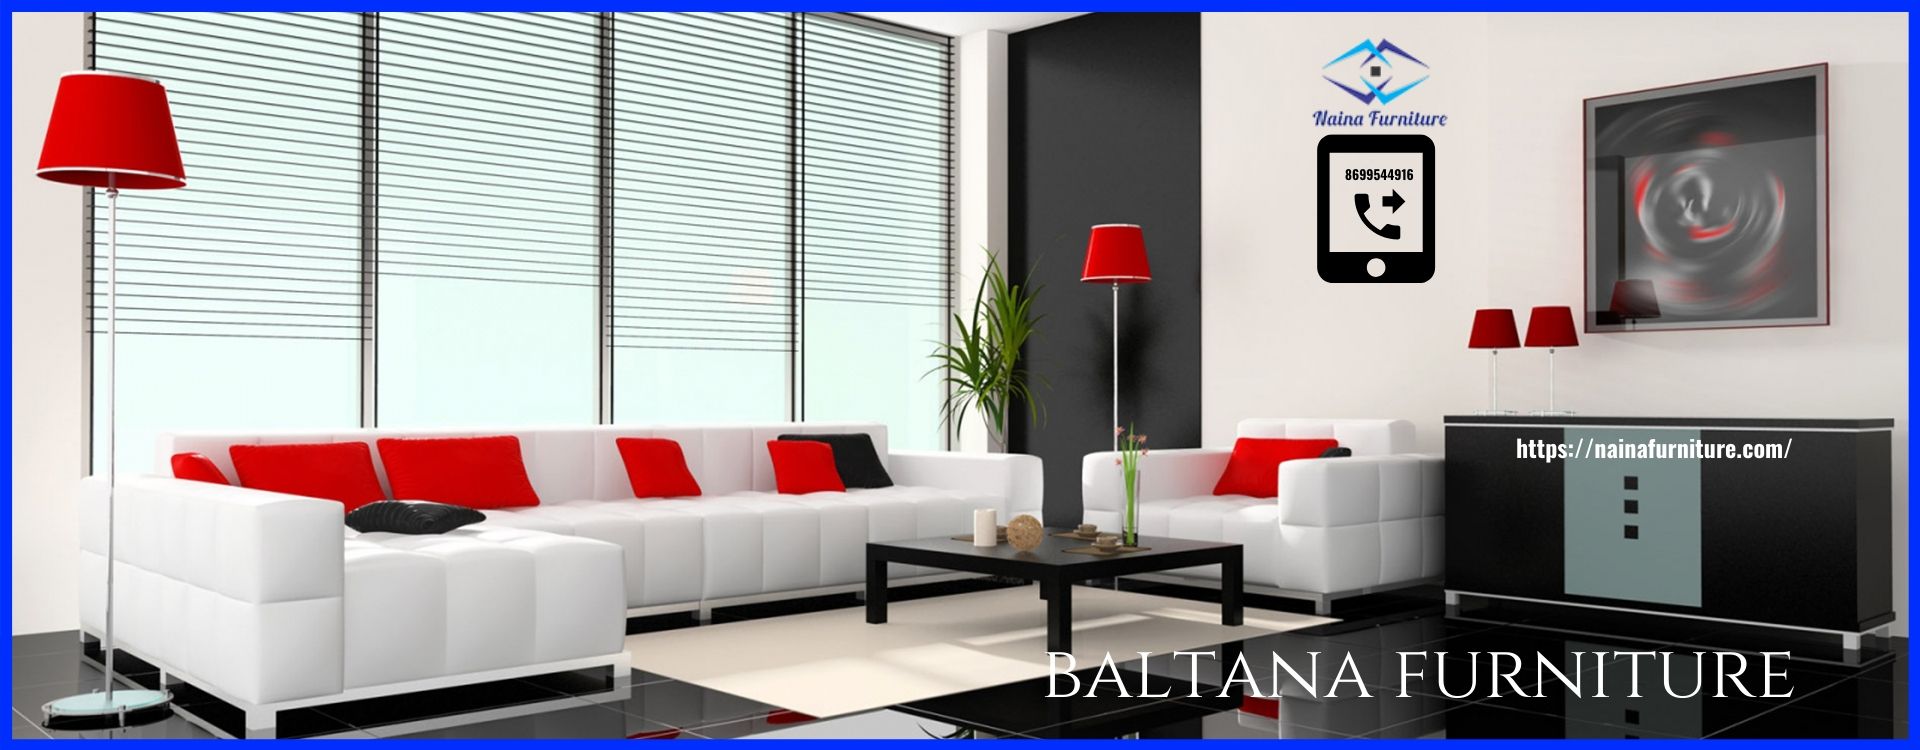 baltana furniture.jpg